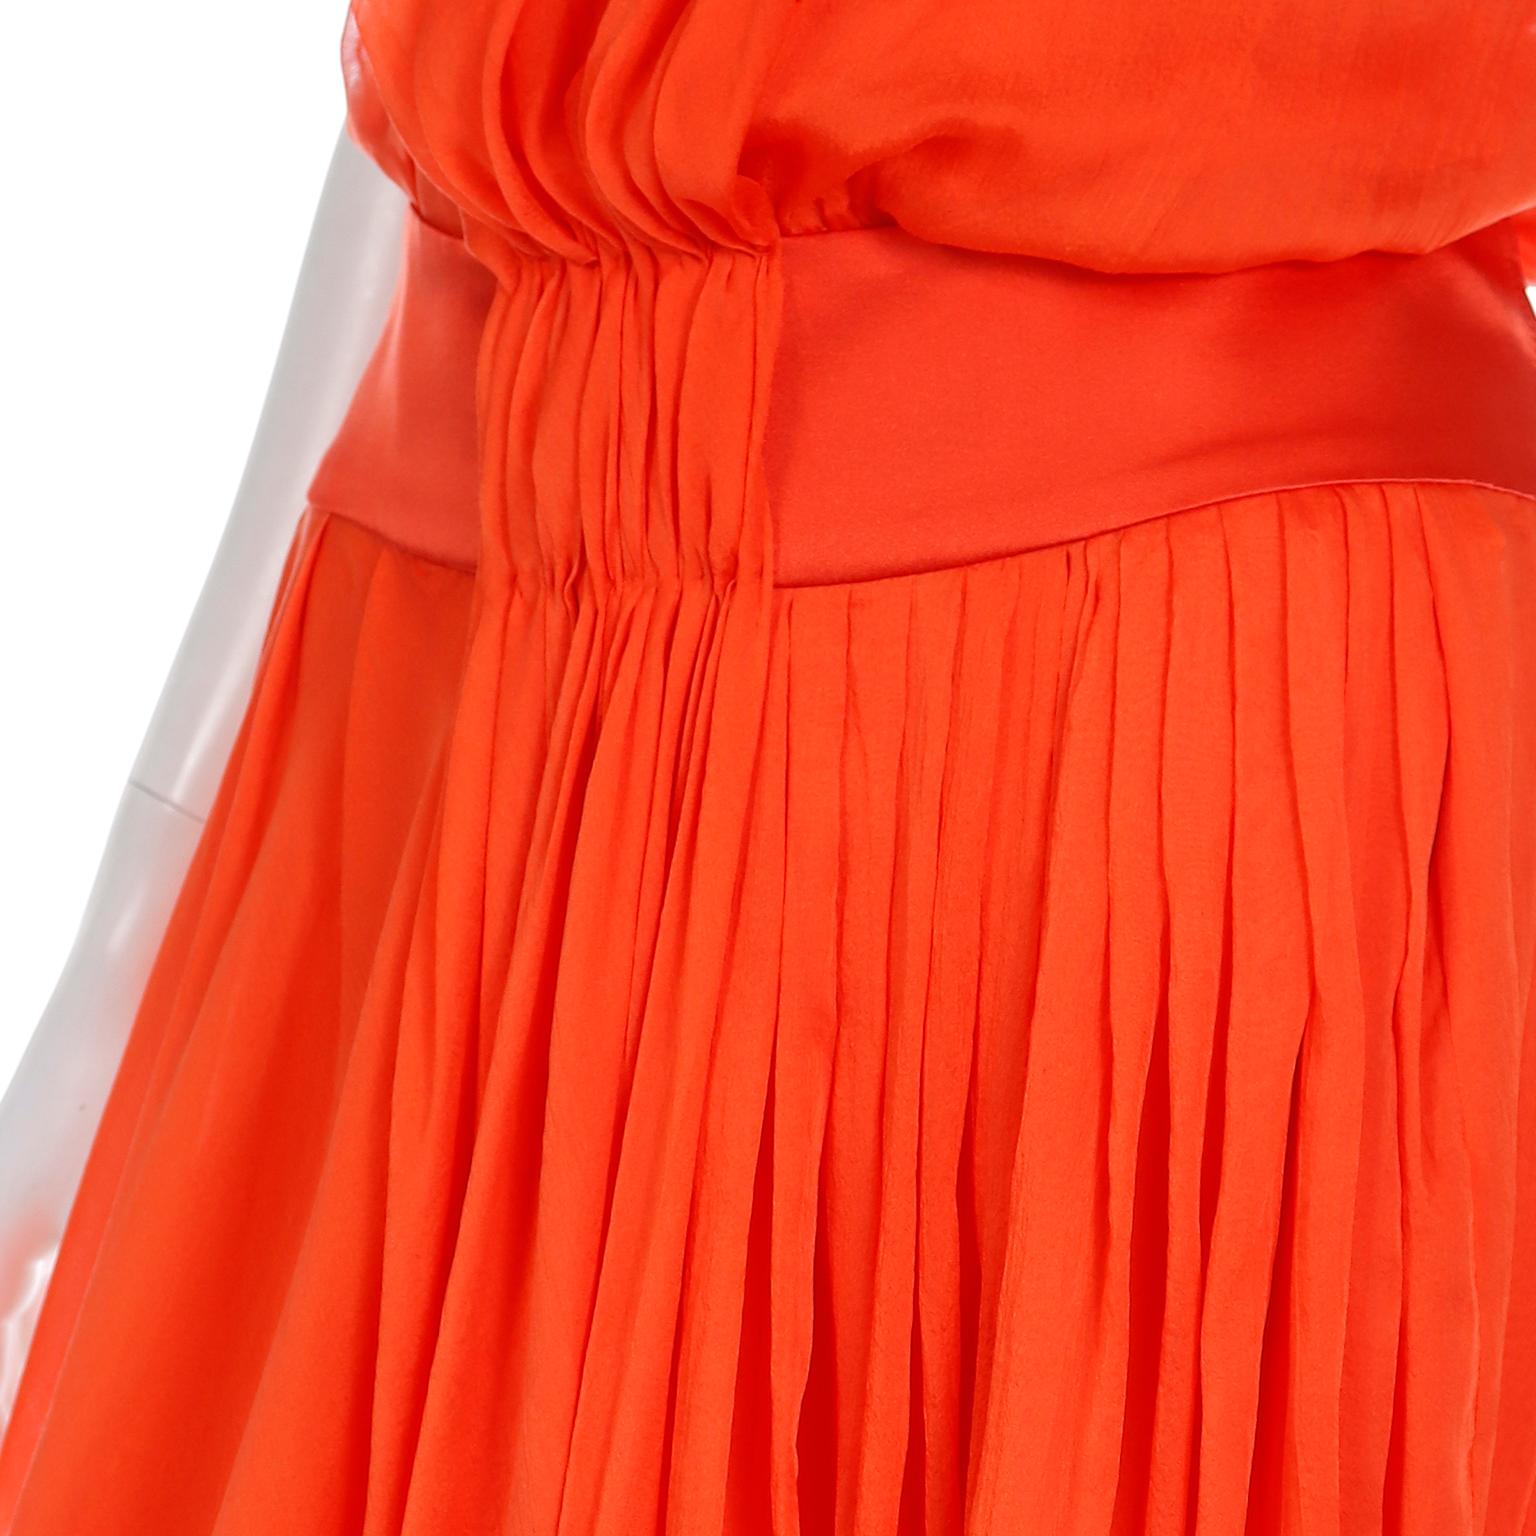 Vintage Fine Silk Chiffon Orange Sleeveless Dress With Satin Waistband For Sale 6